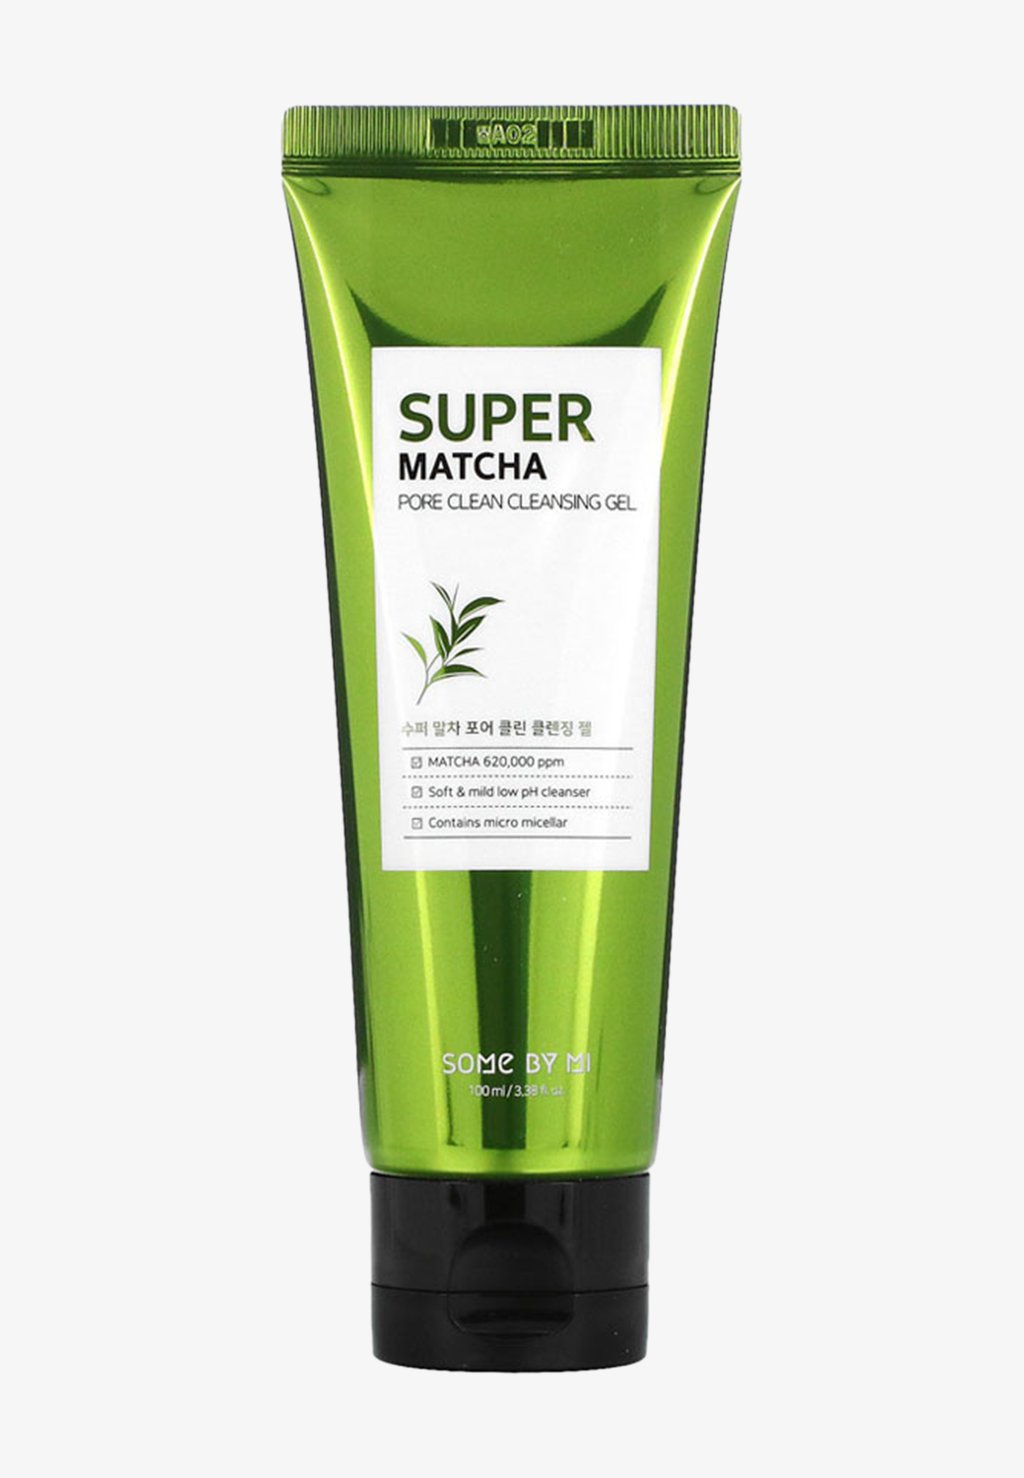 Очищающее средство Super Matcha Pore Clean Cleansing Gel SOME BY MI somebymi super matcha pore clean cleansing gel